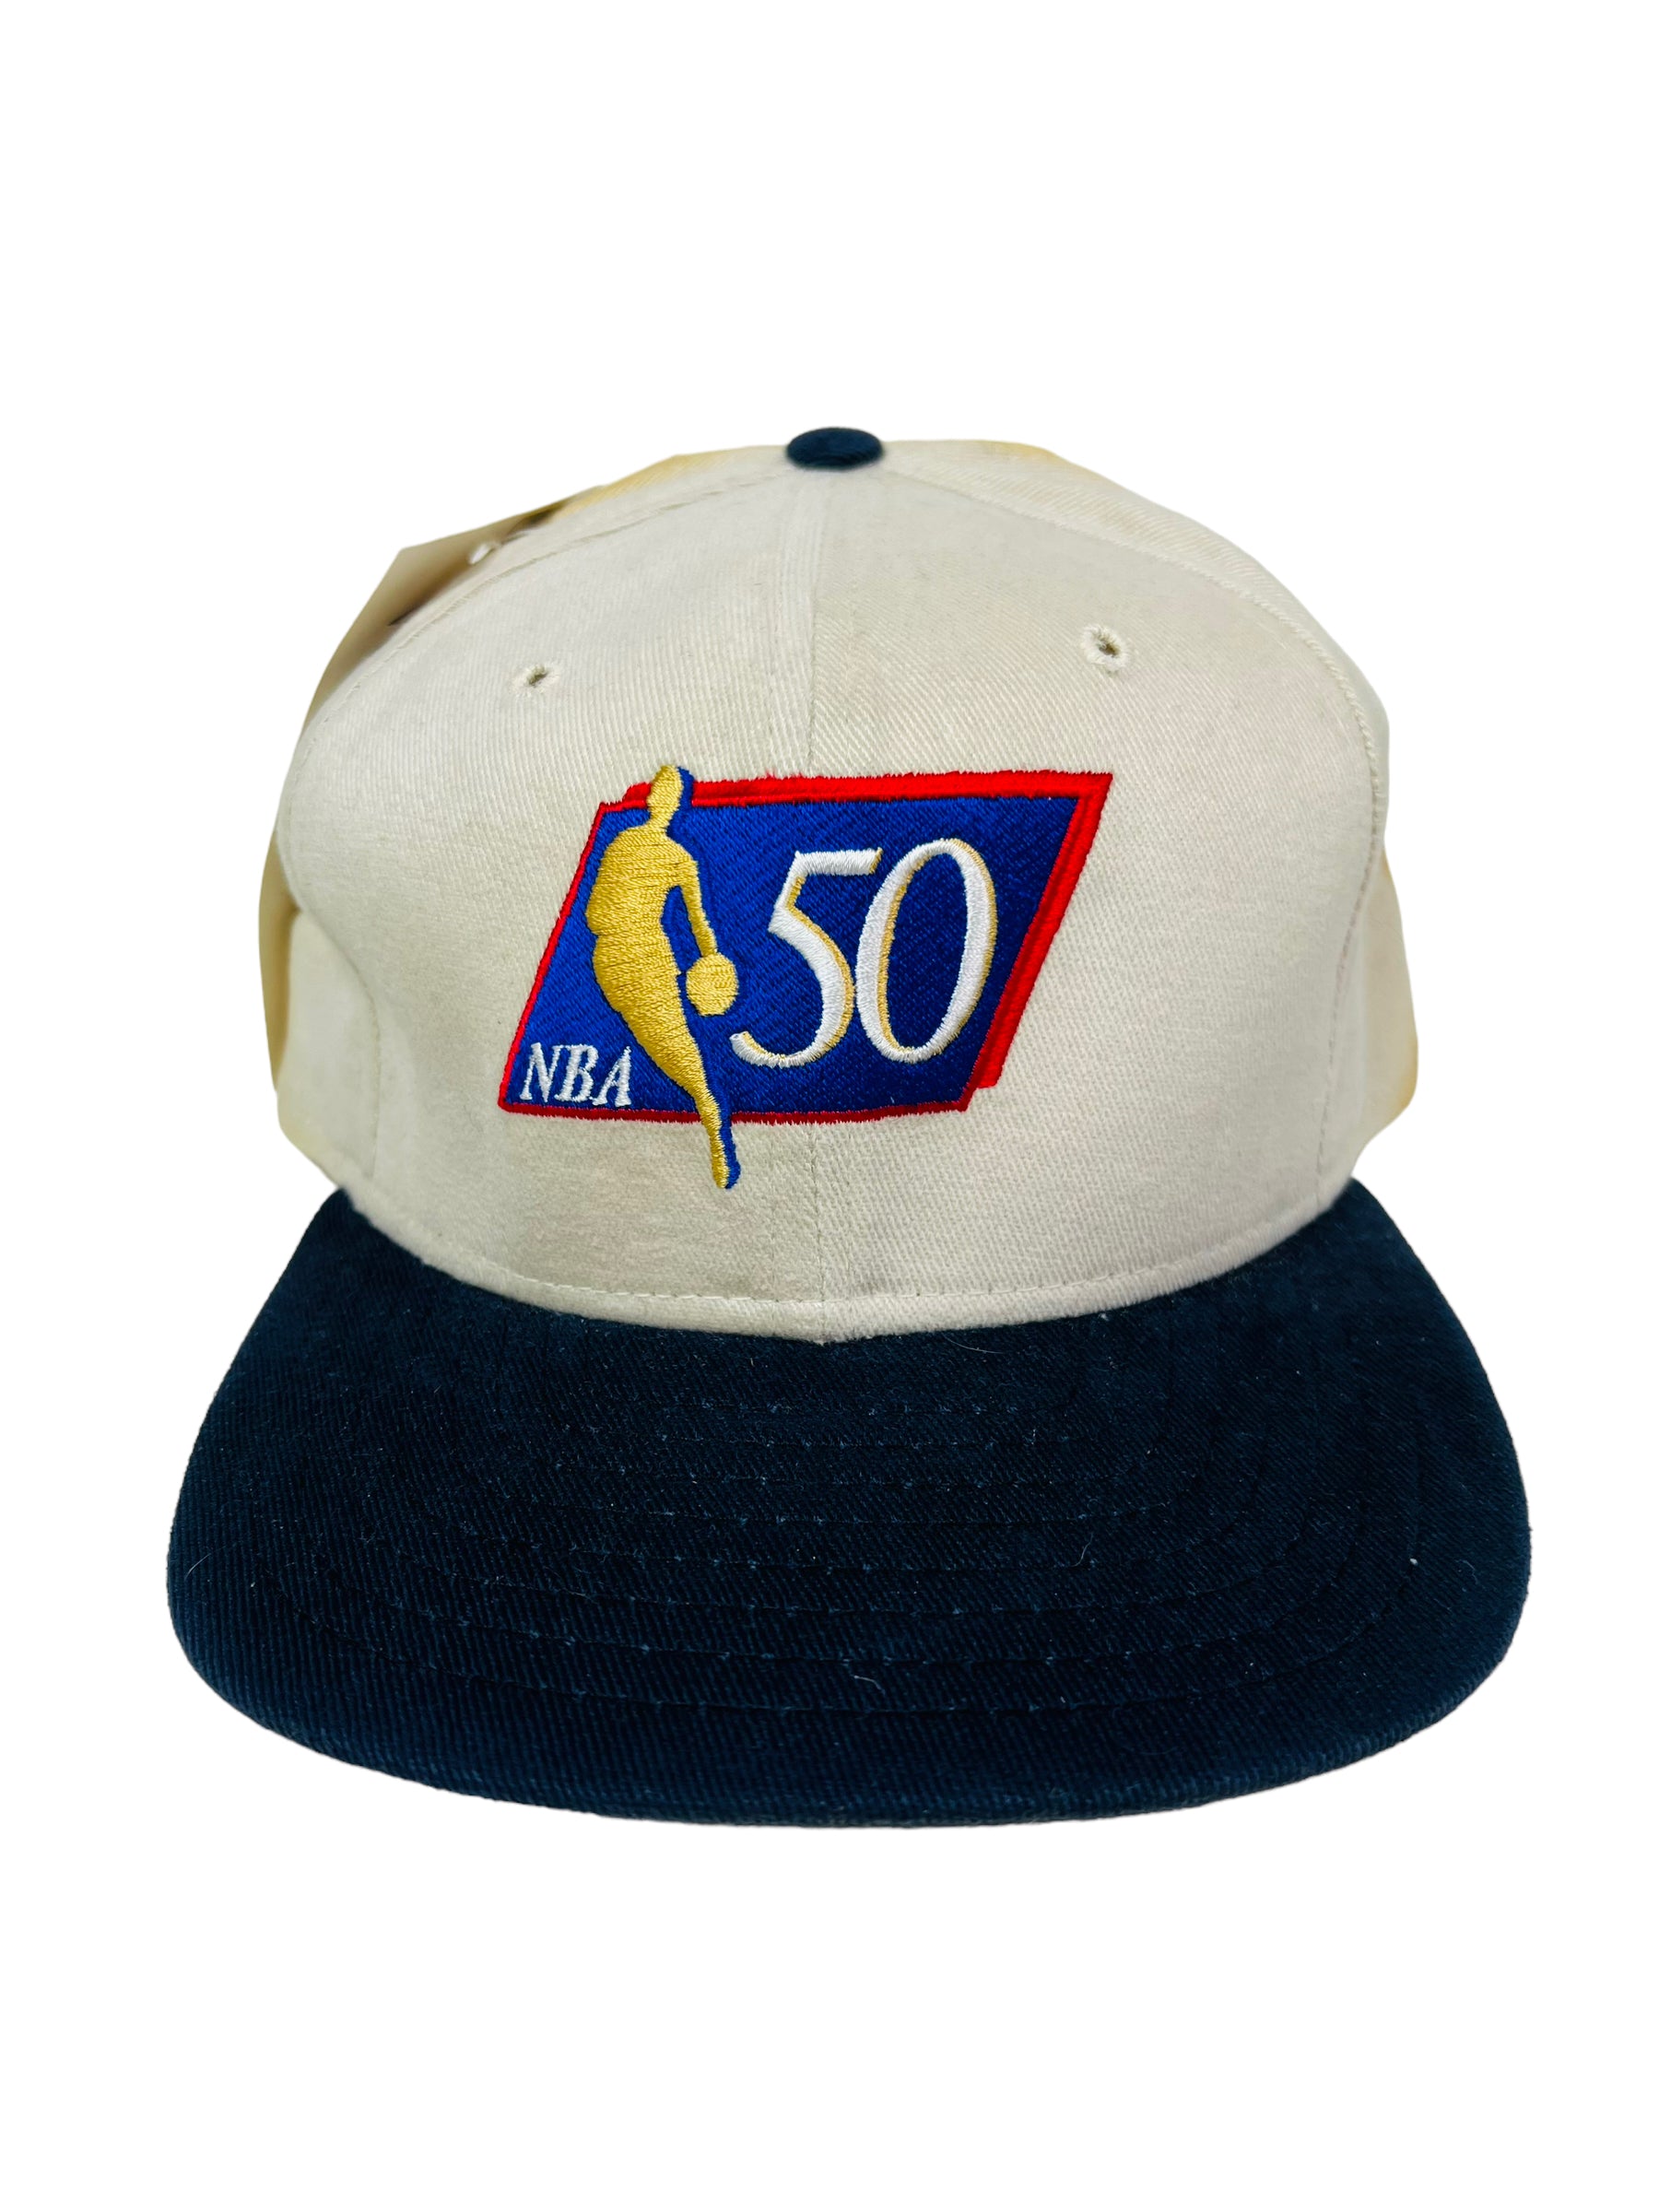 Vintage Nba Hat 